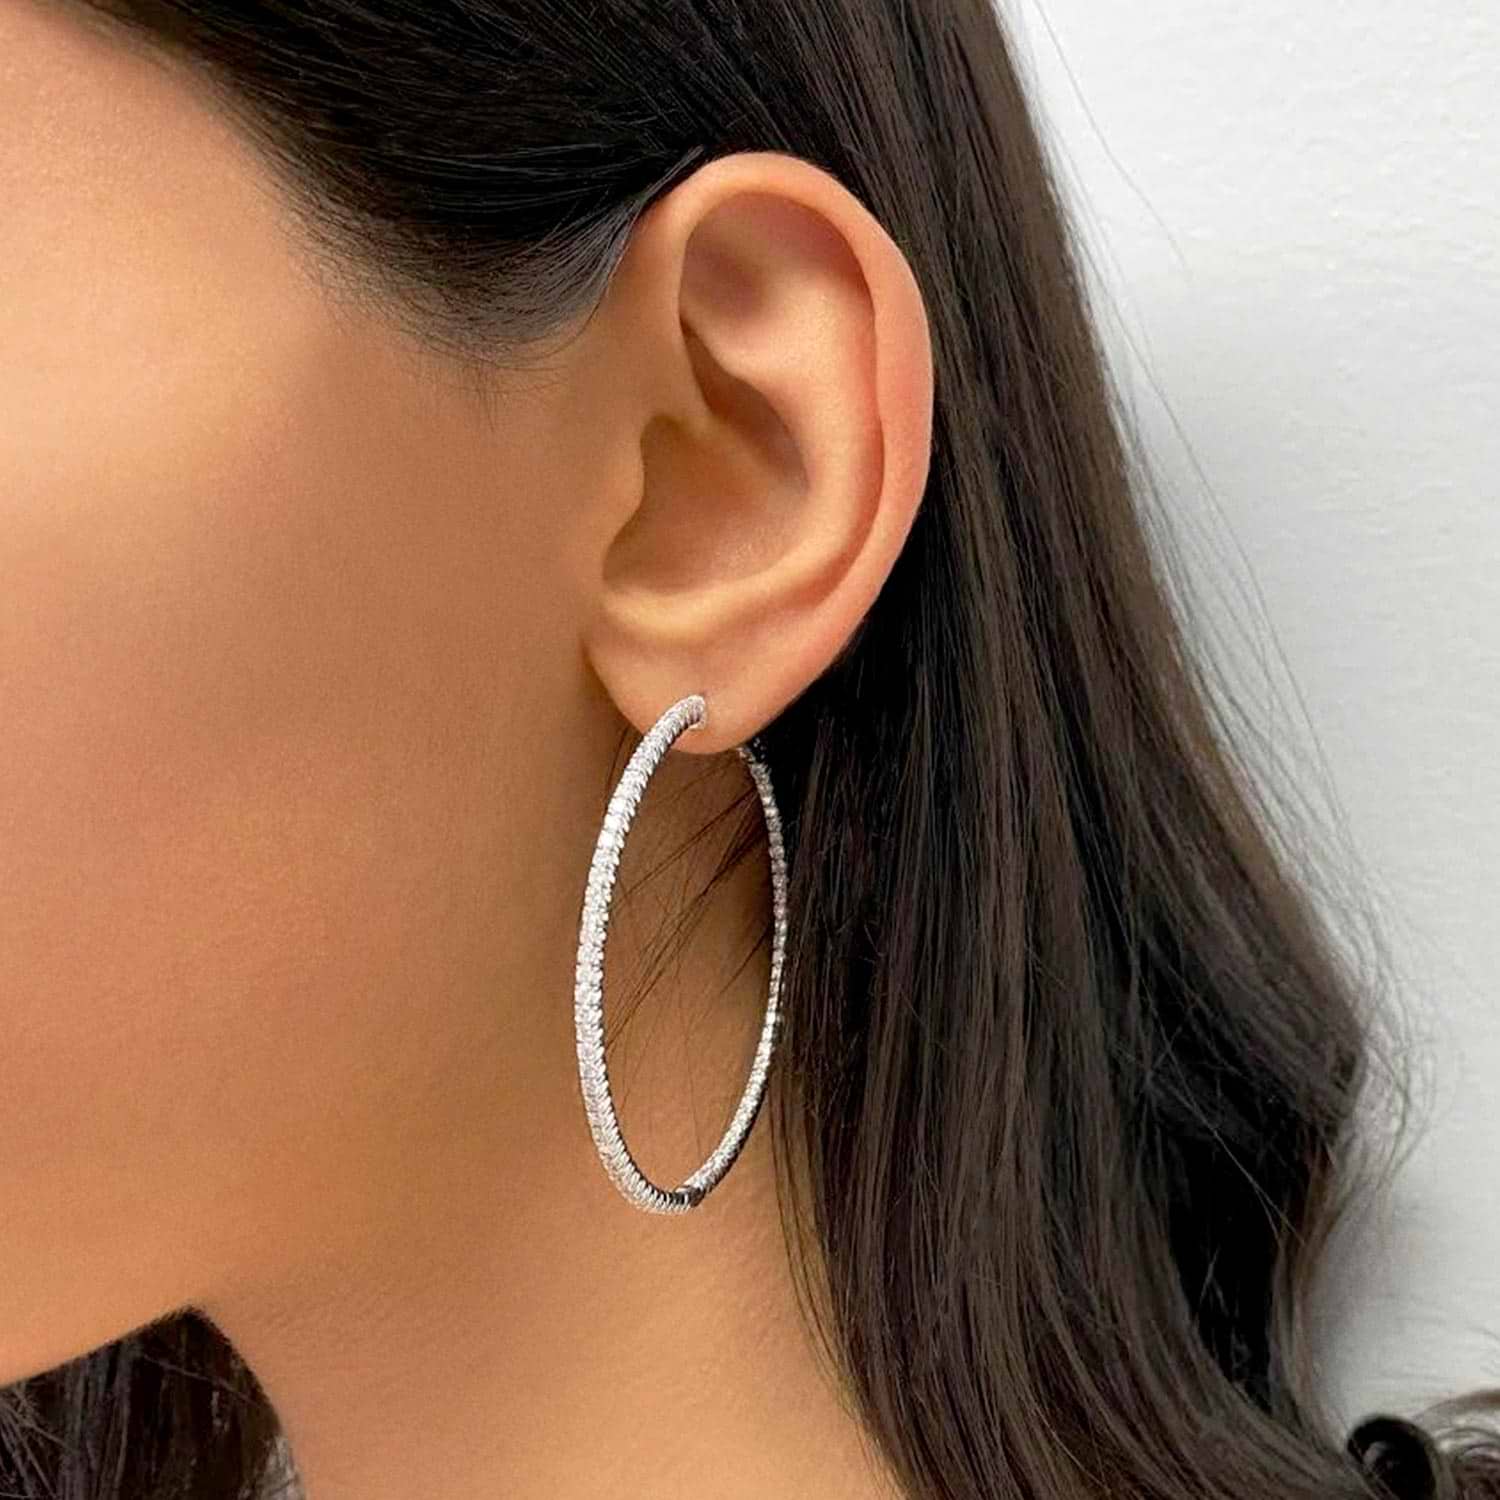 Unique X-Large Diamond Hoop Earrings 14k White Gold (3.00ct)